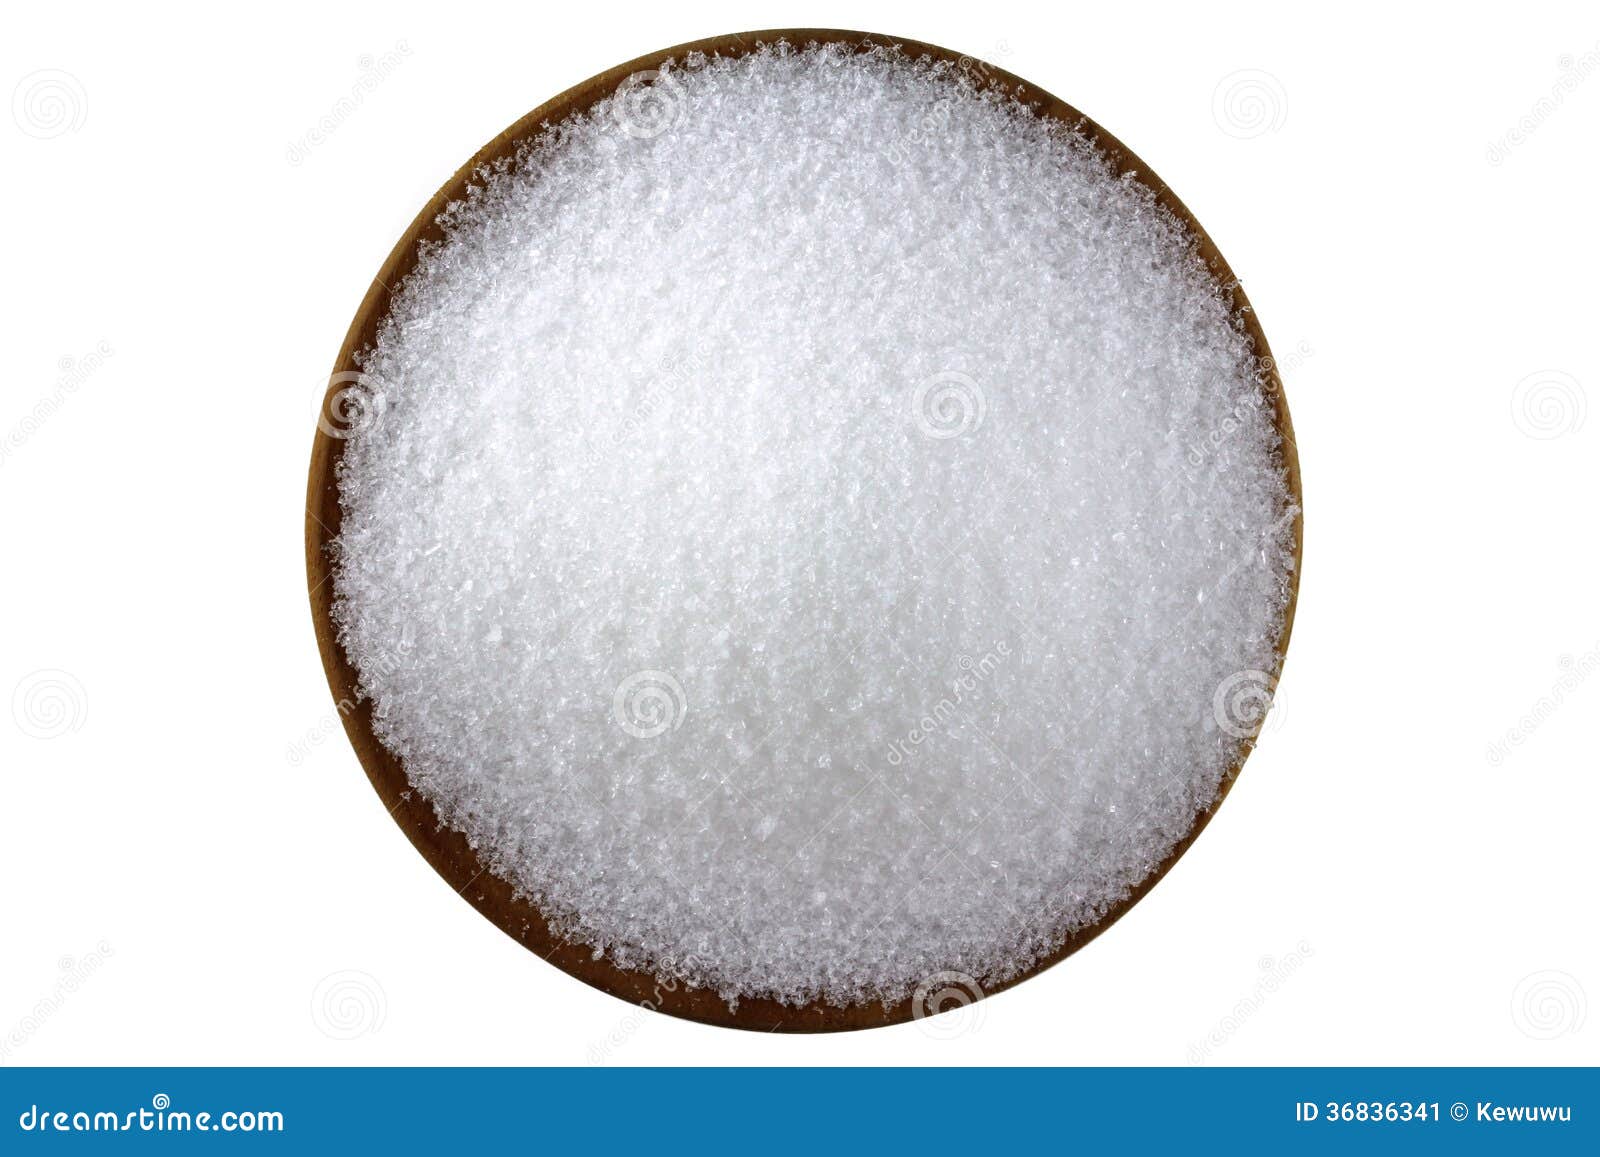 magnesium sulfate (epsom salts)